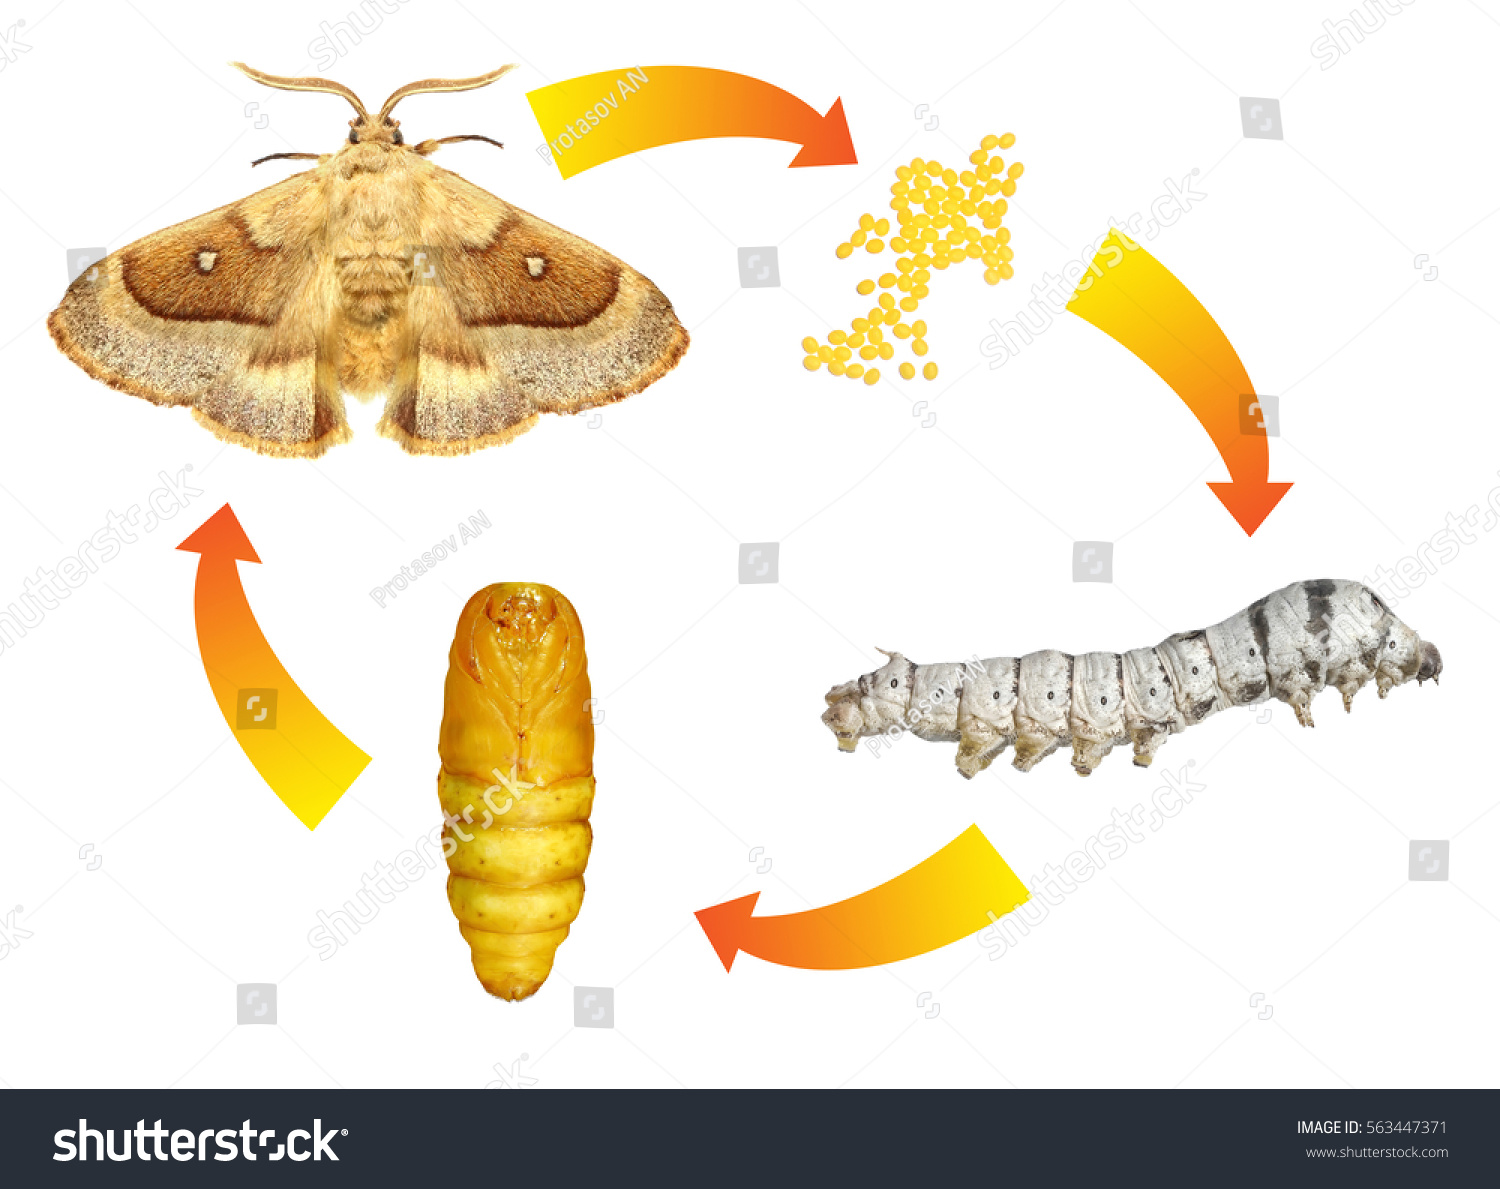 Development Cycle Eggar Moth Lasiocampa Grandis Stock Photo 563447371 ...